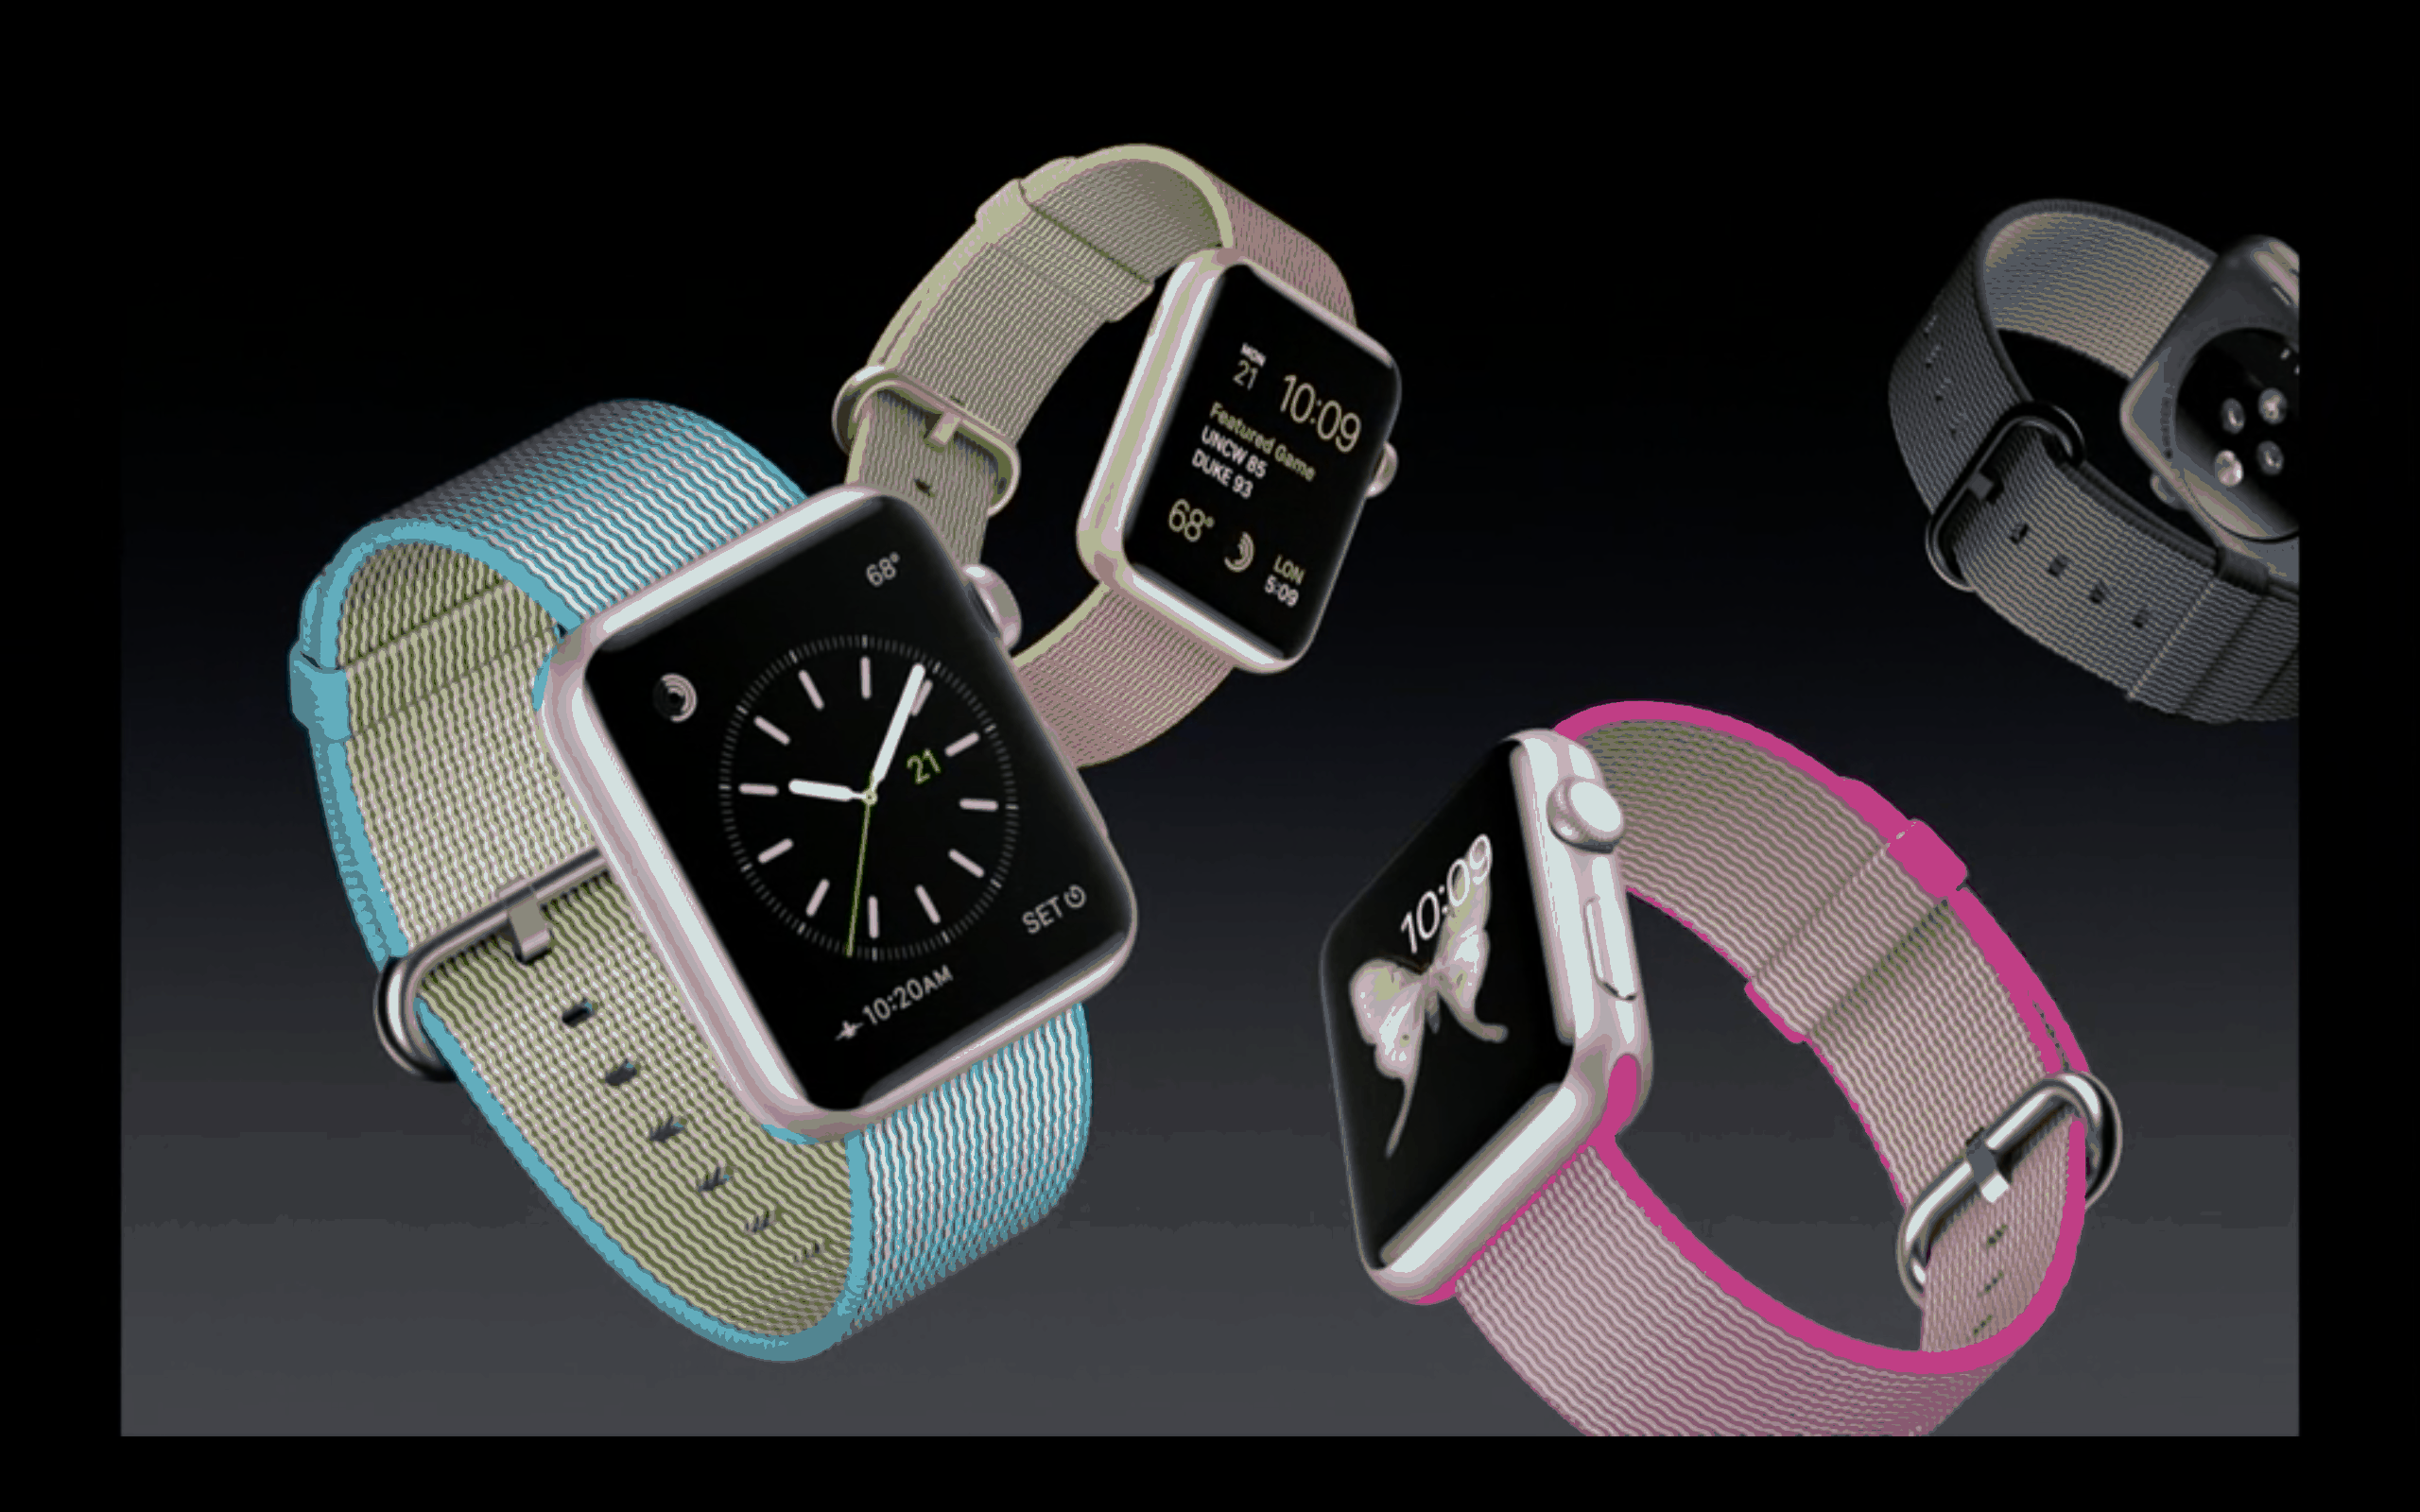 Apple Watch nylon bands